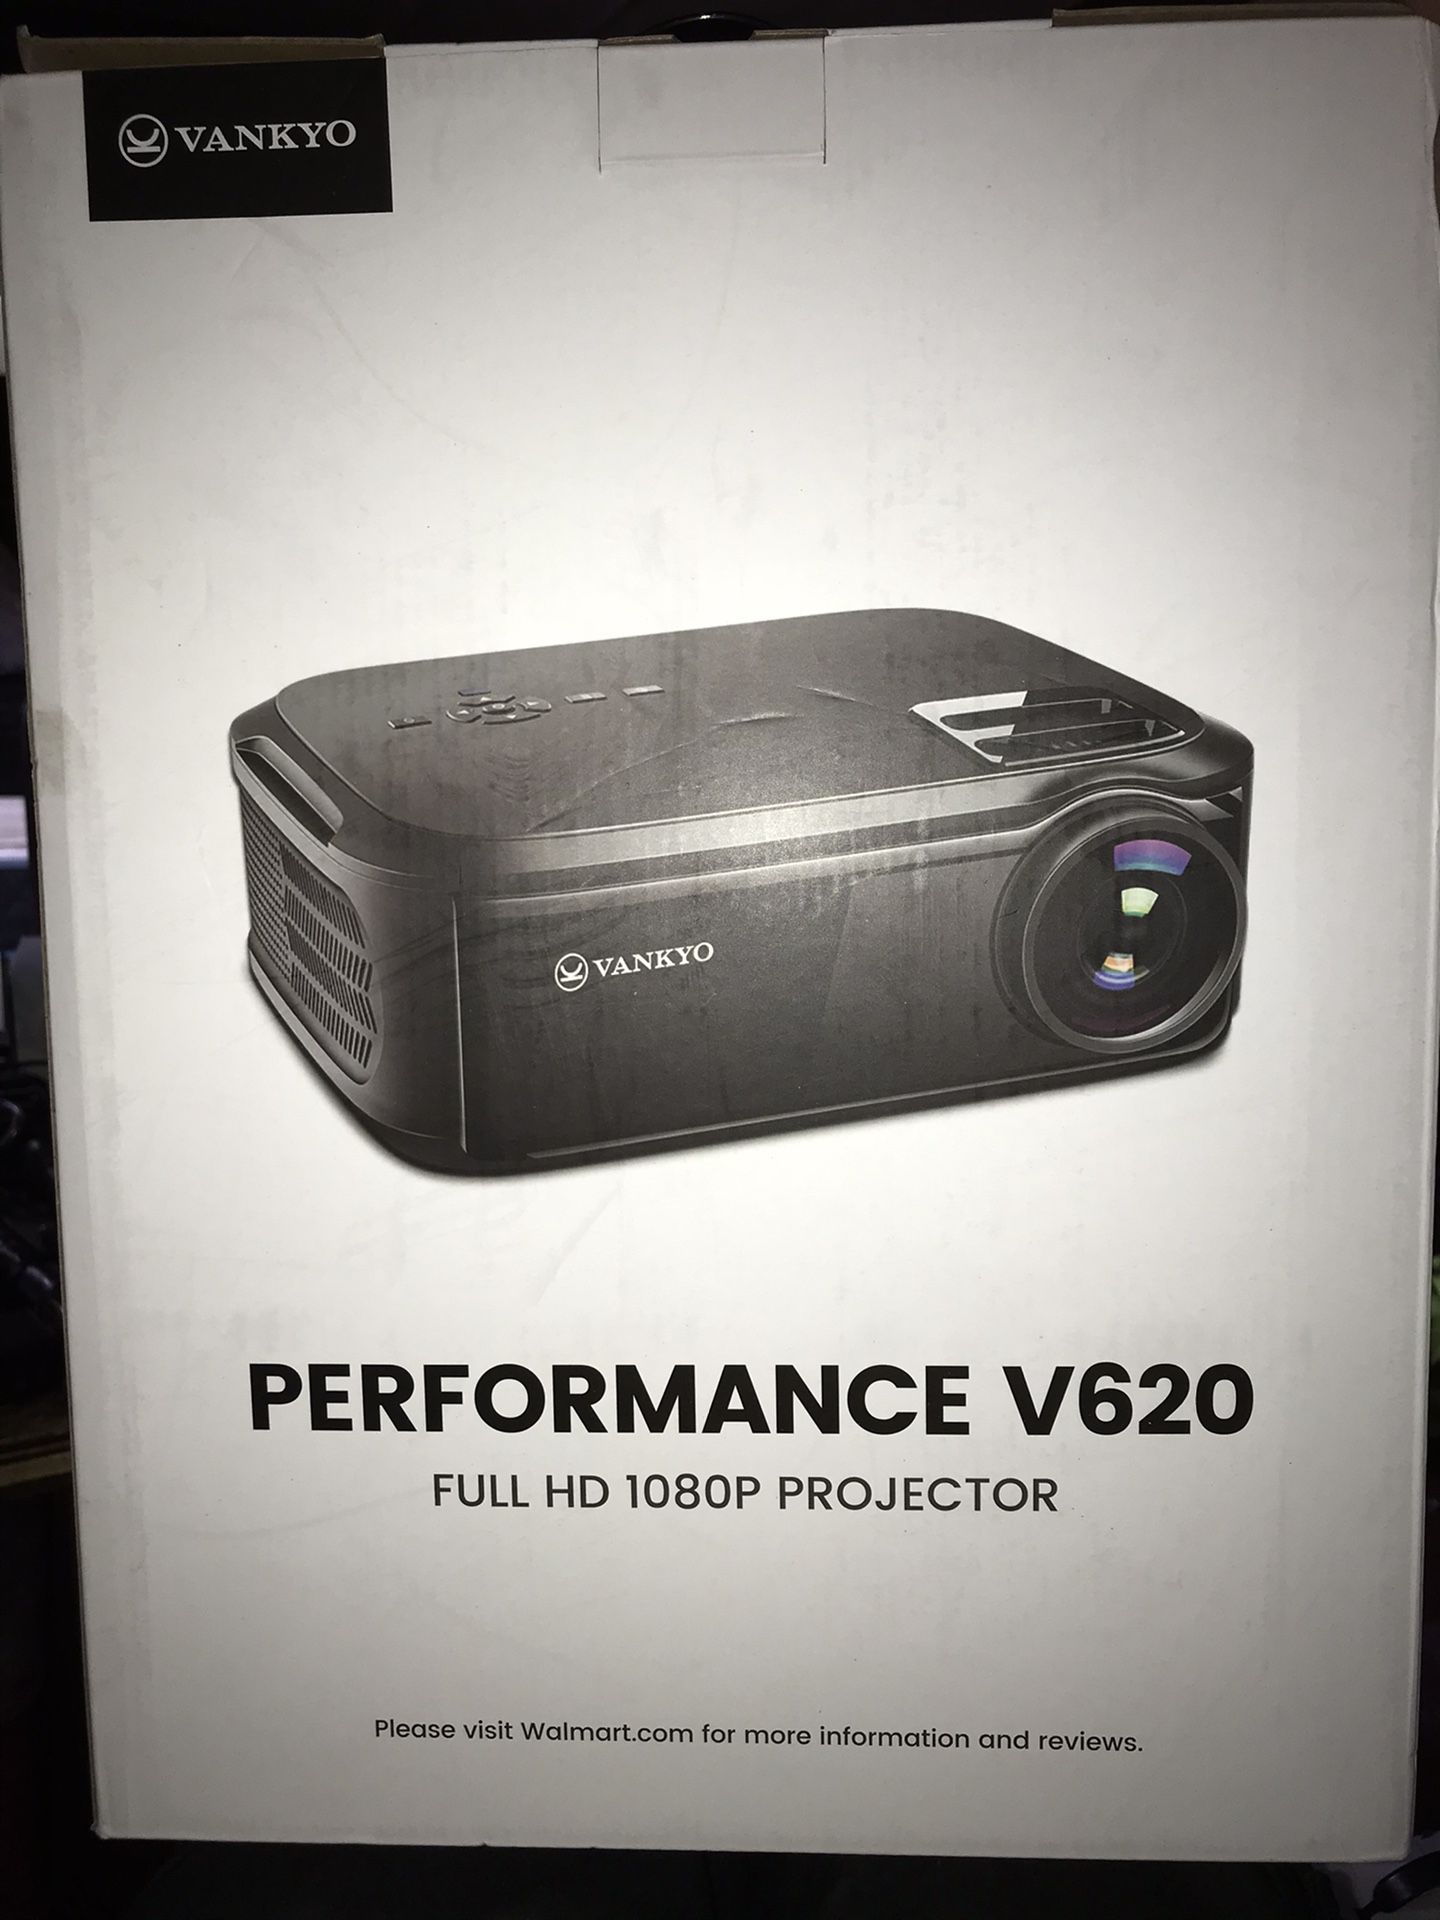 Vankyo Performance V620 Full HD Projector